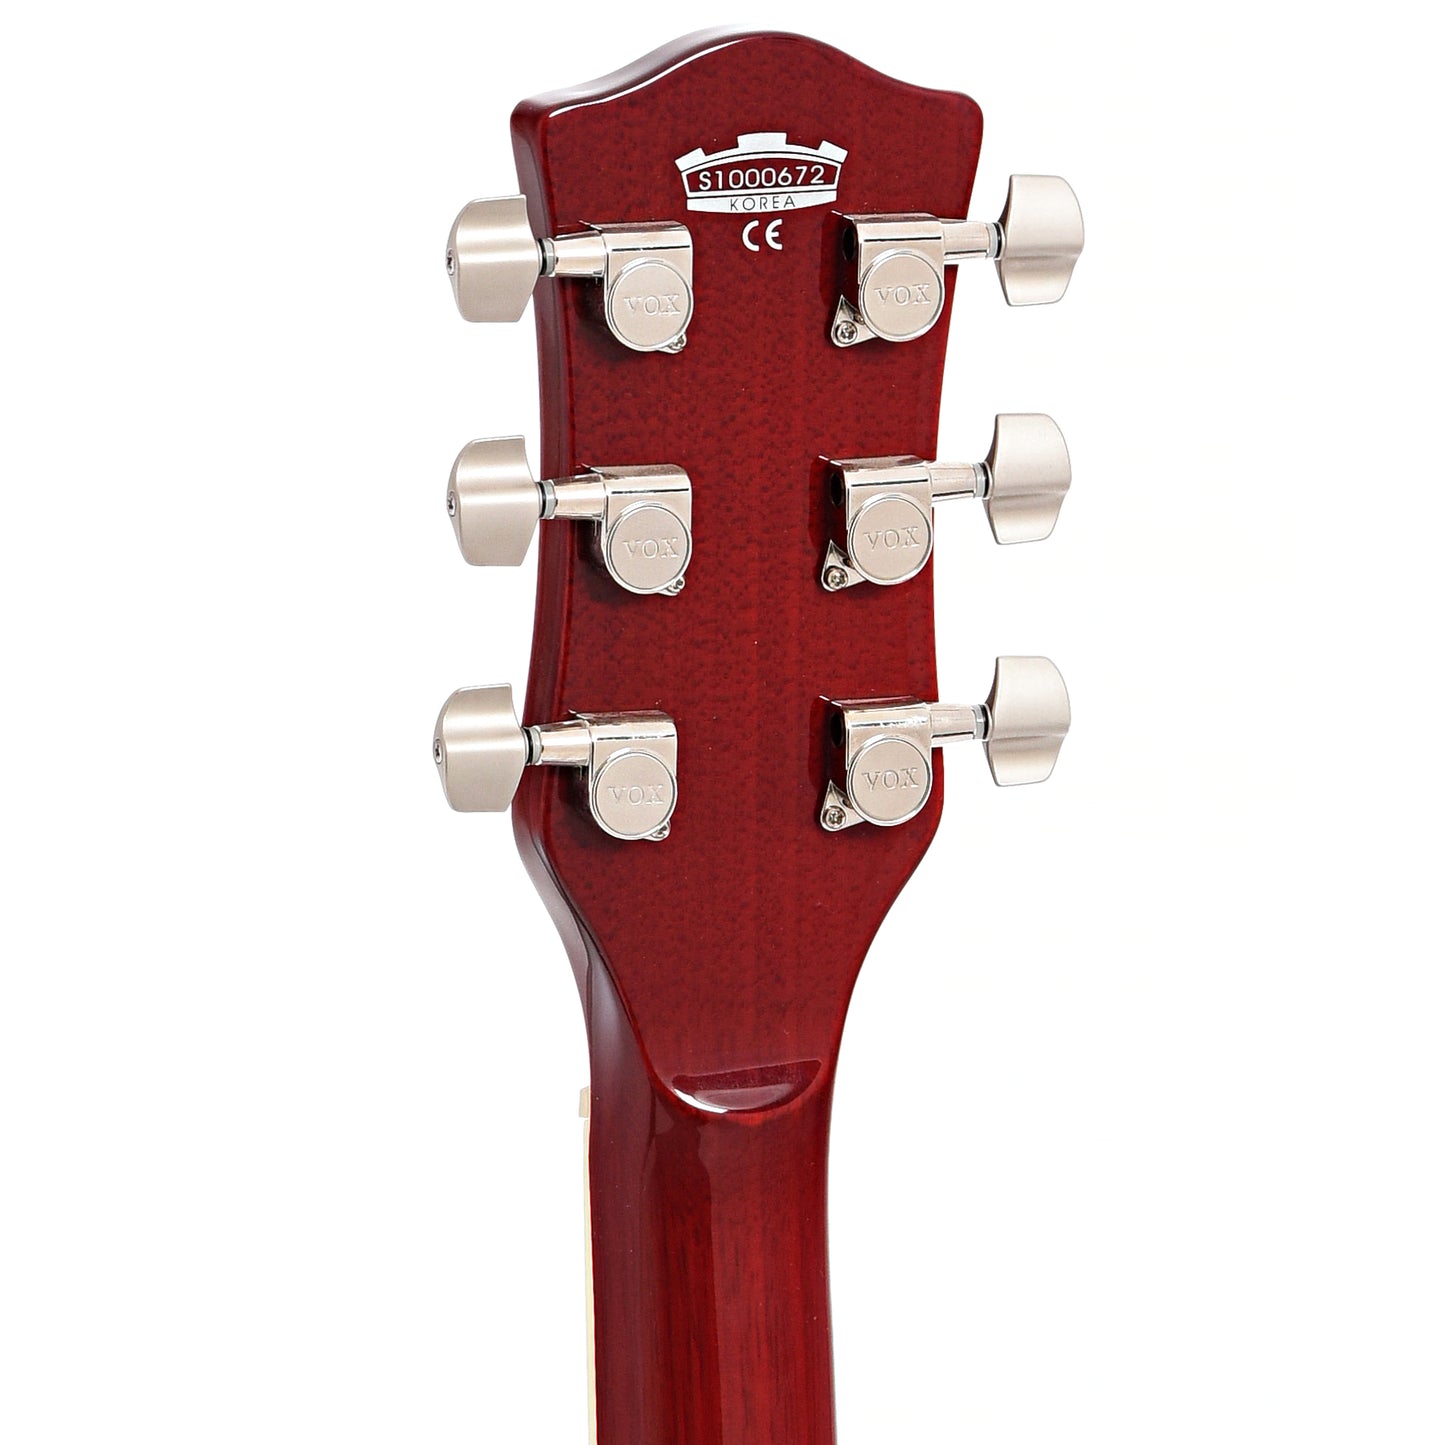 Vox SDC-55 Electric Guitar (2010)